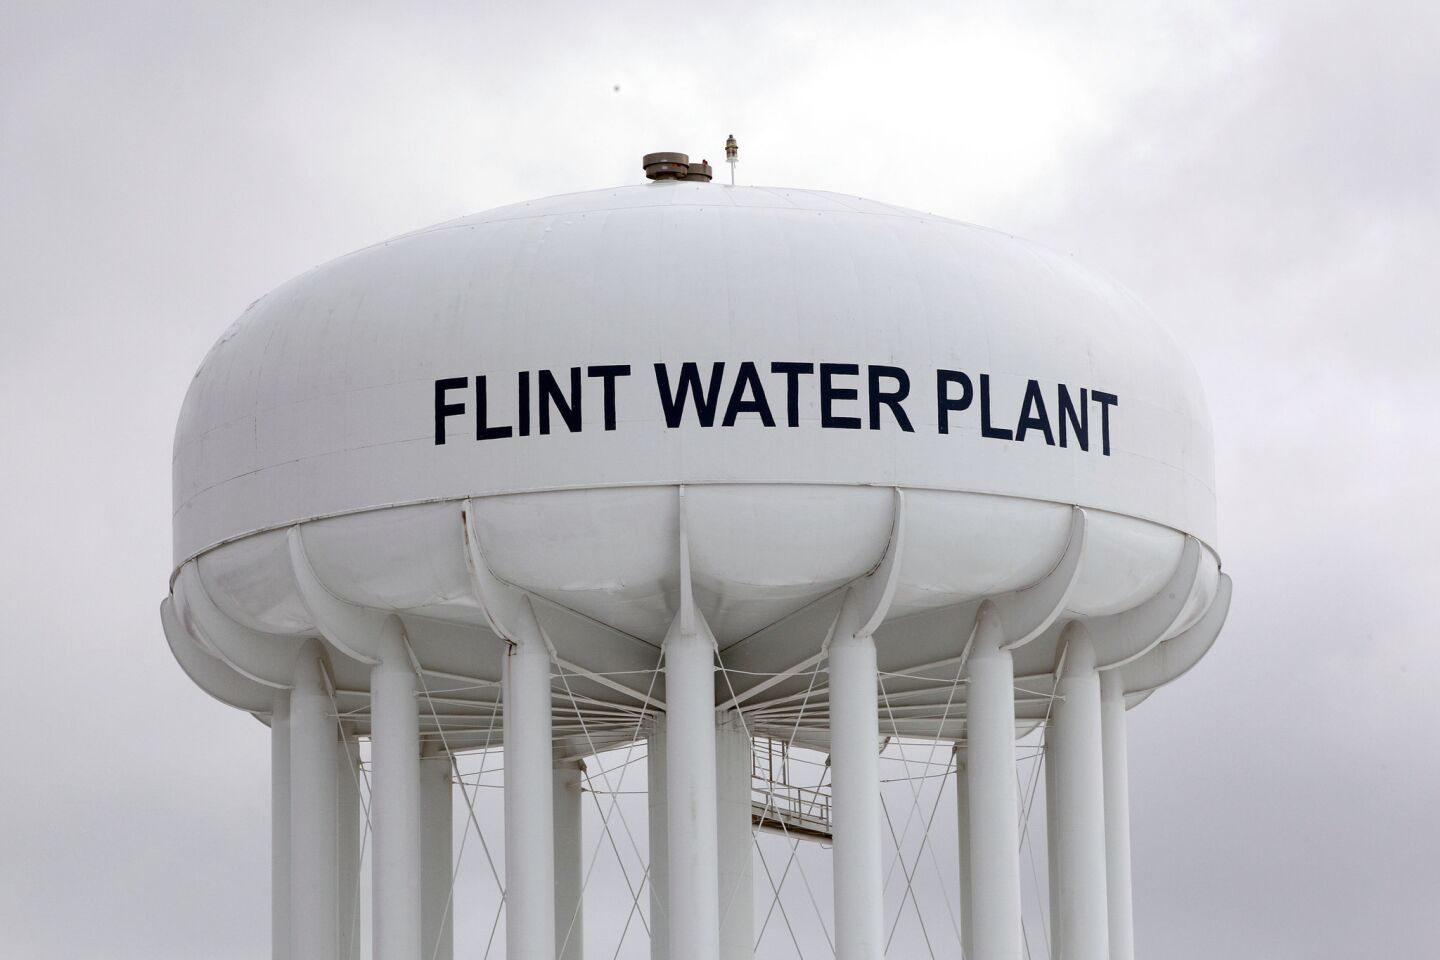 Water crisis in Flint, Michigan